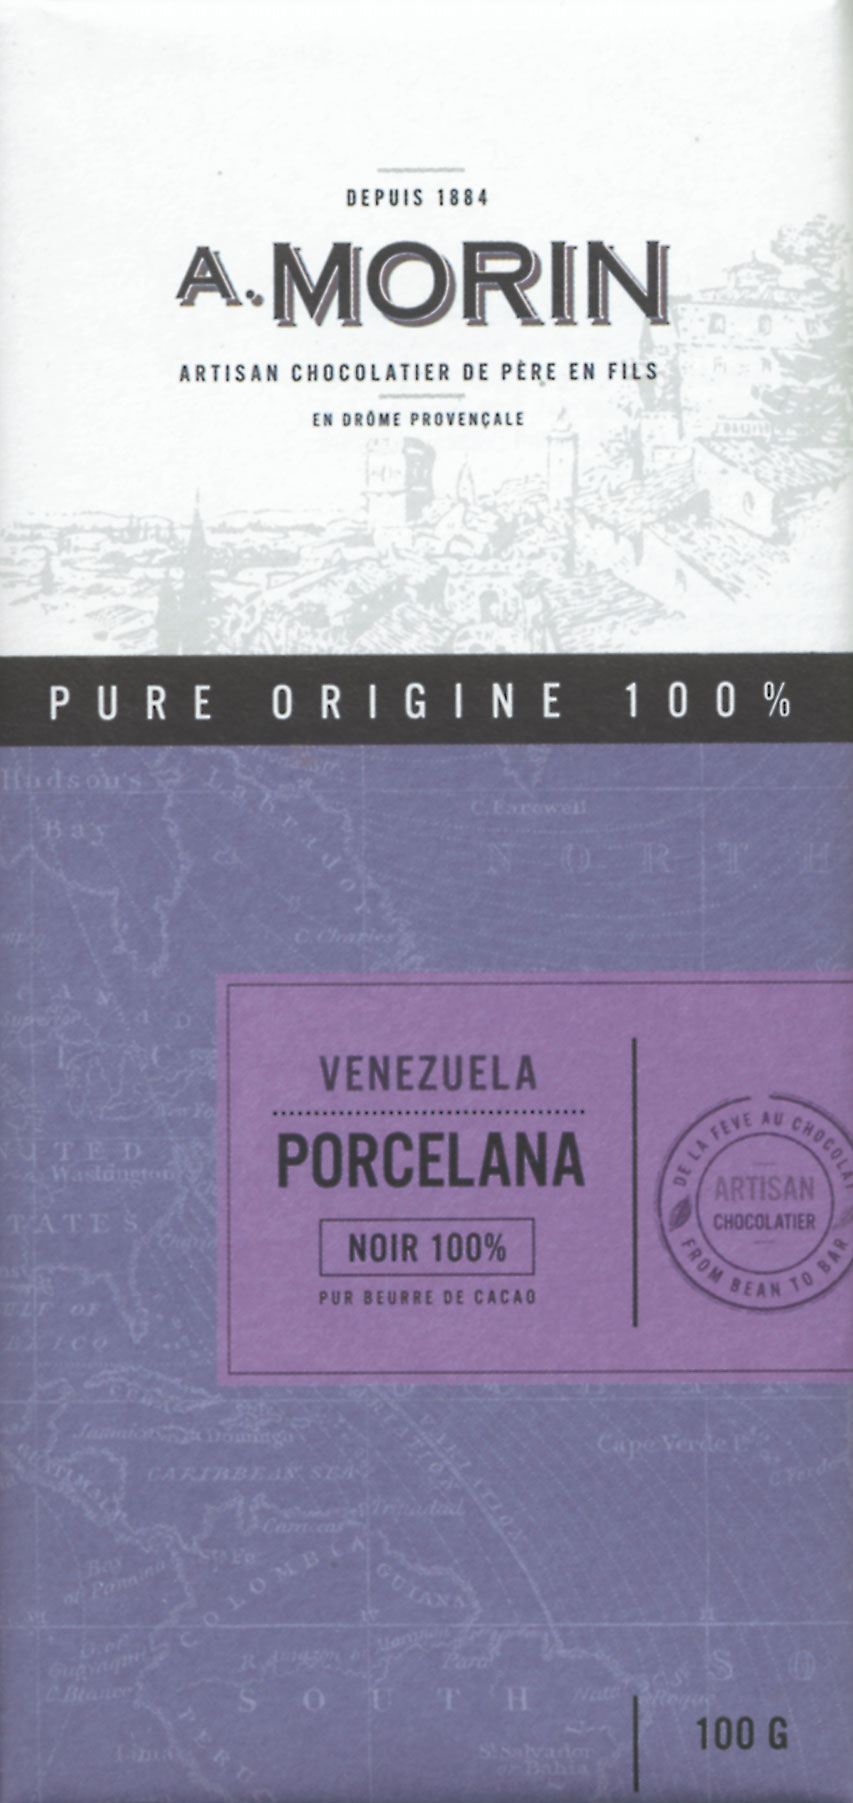 A. MORIN Schokoladen | Kakaomasse Venezuela »Porcelana« 100% | 100g